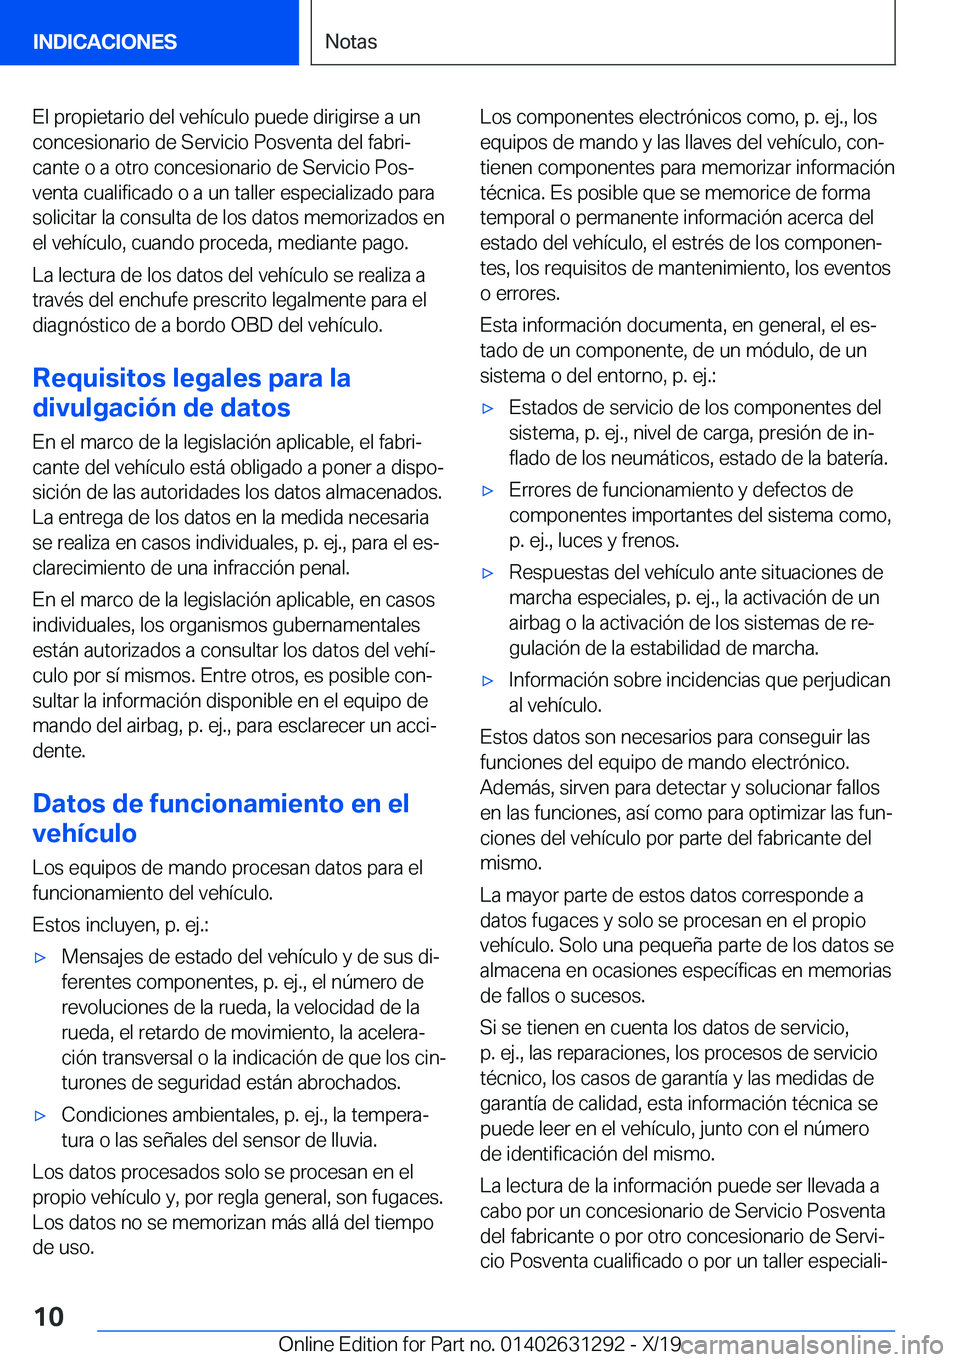 BMW M8 2020  Manuales de Empleo (in Spanish) �E�l��p�r�o�p�i�e�t�a�r�i�o��d�e�l��v�e�h�